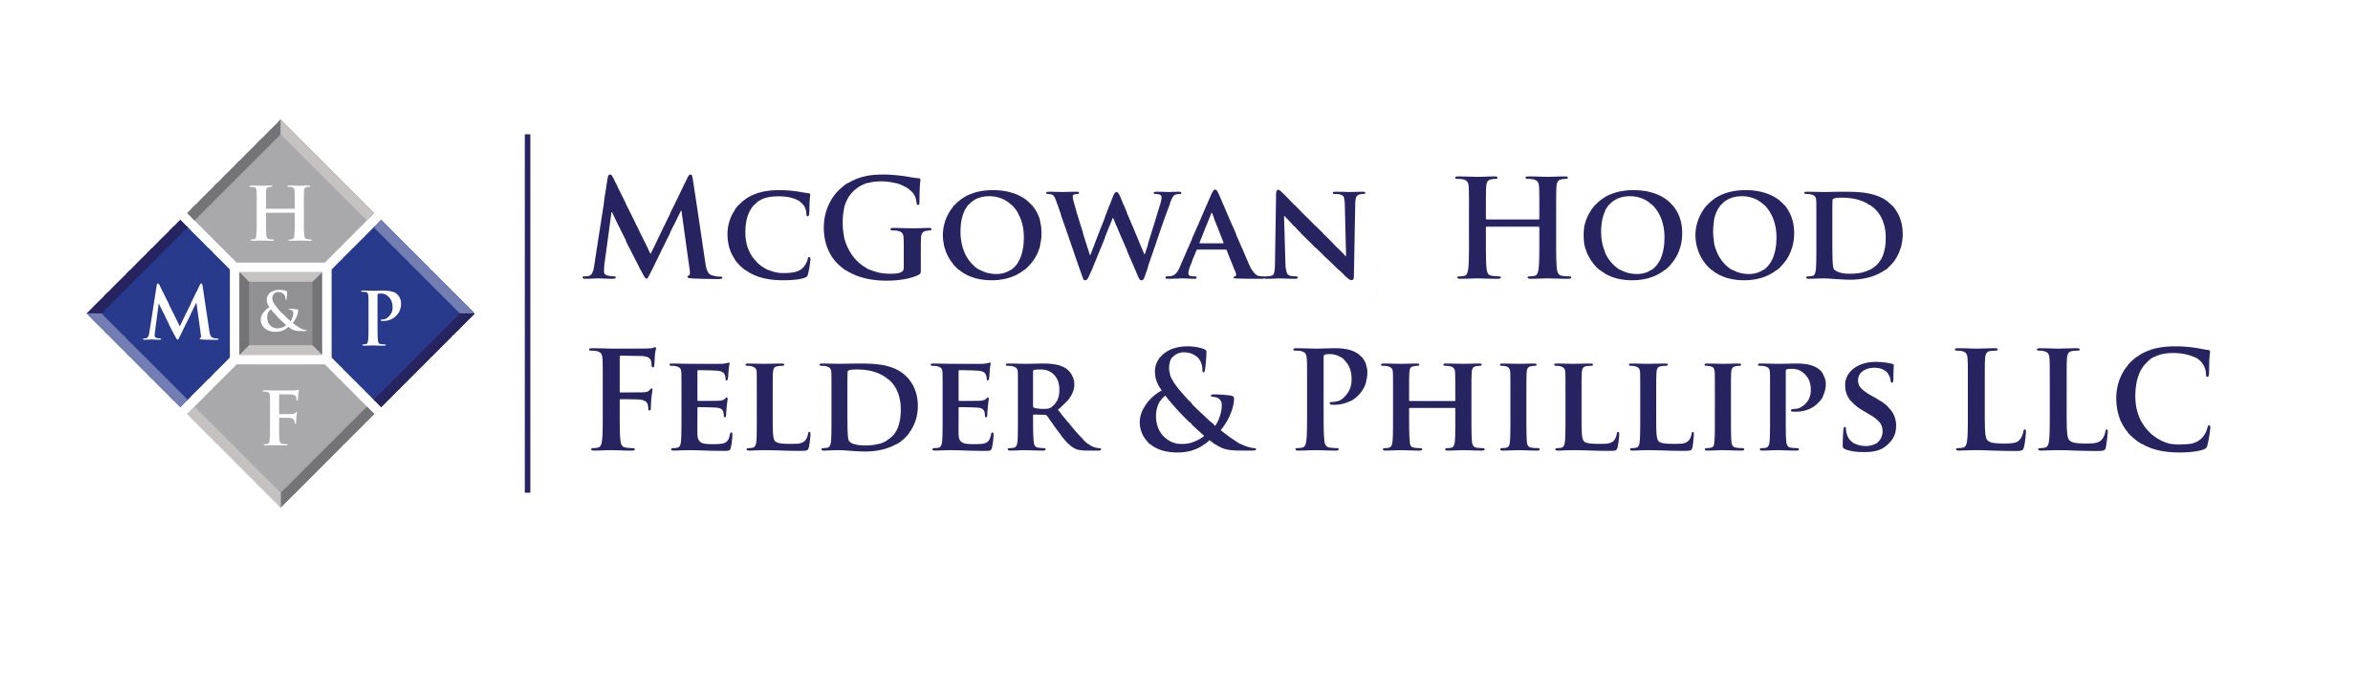 McGowan, Hood Felder & Phillips LLC